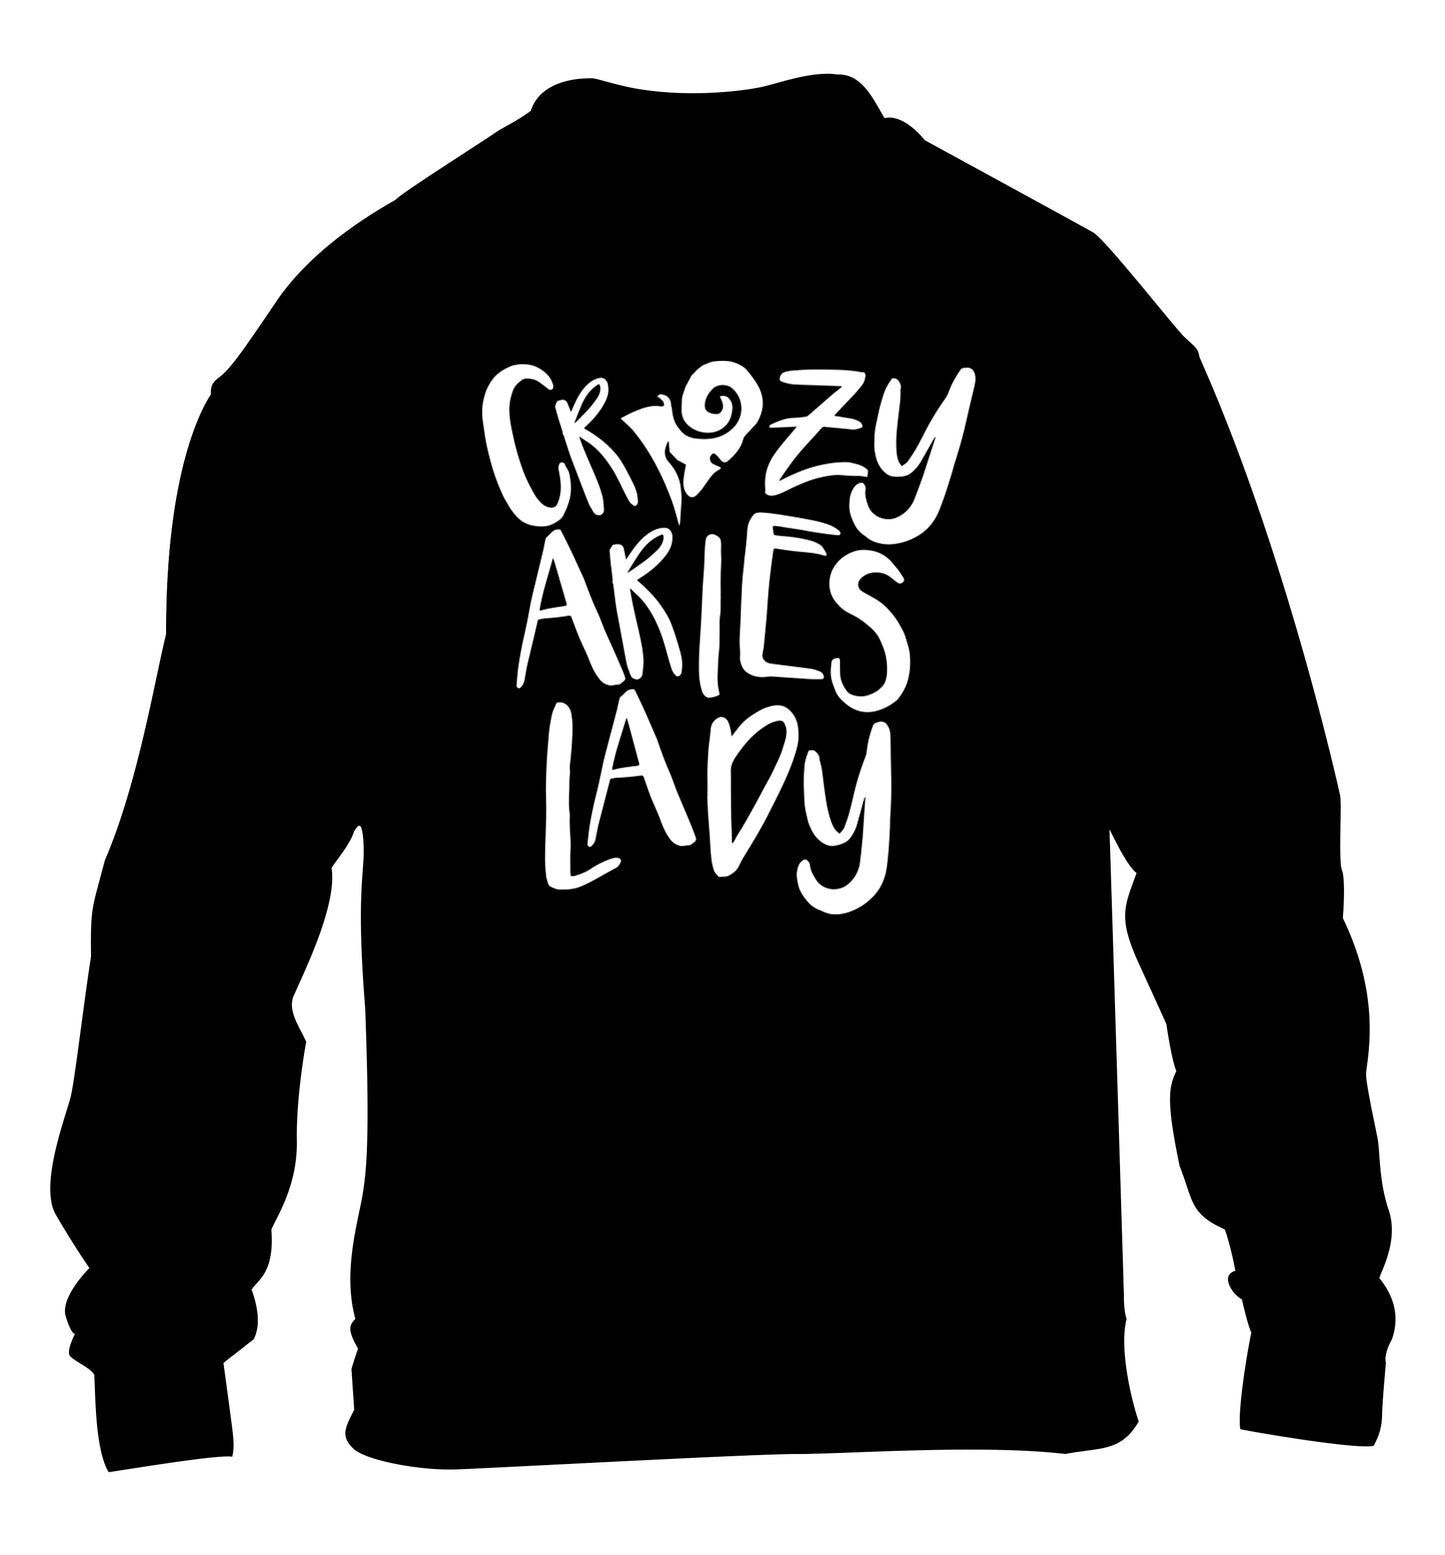 Crazy aries lady children's black sweater 12-13 Years